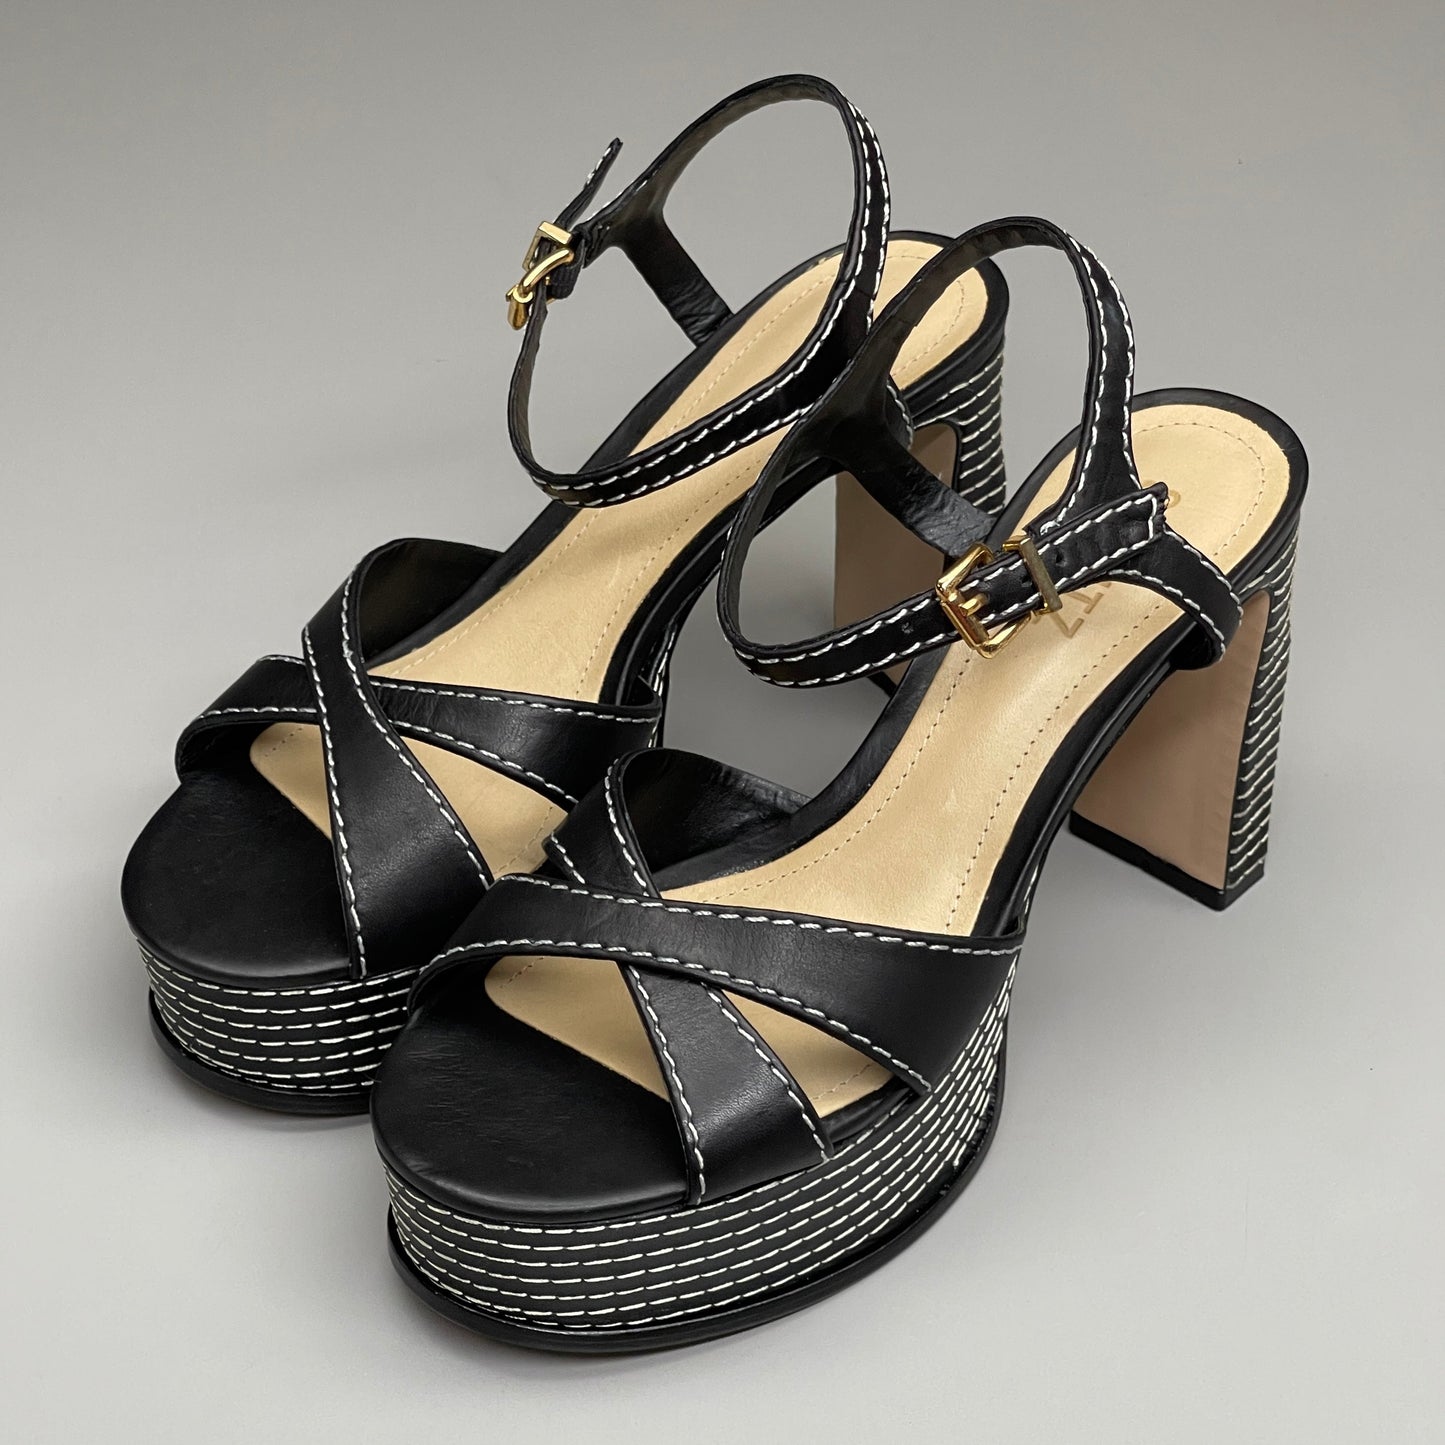 SCHUTZ Keefa Casual Women's Leather Sandal Black Platform 4" Heel Shoes Sz 10.5B (New)